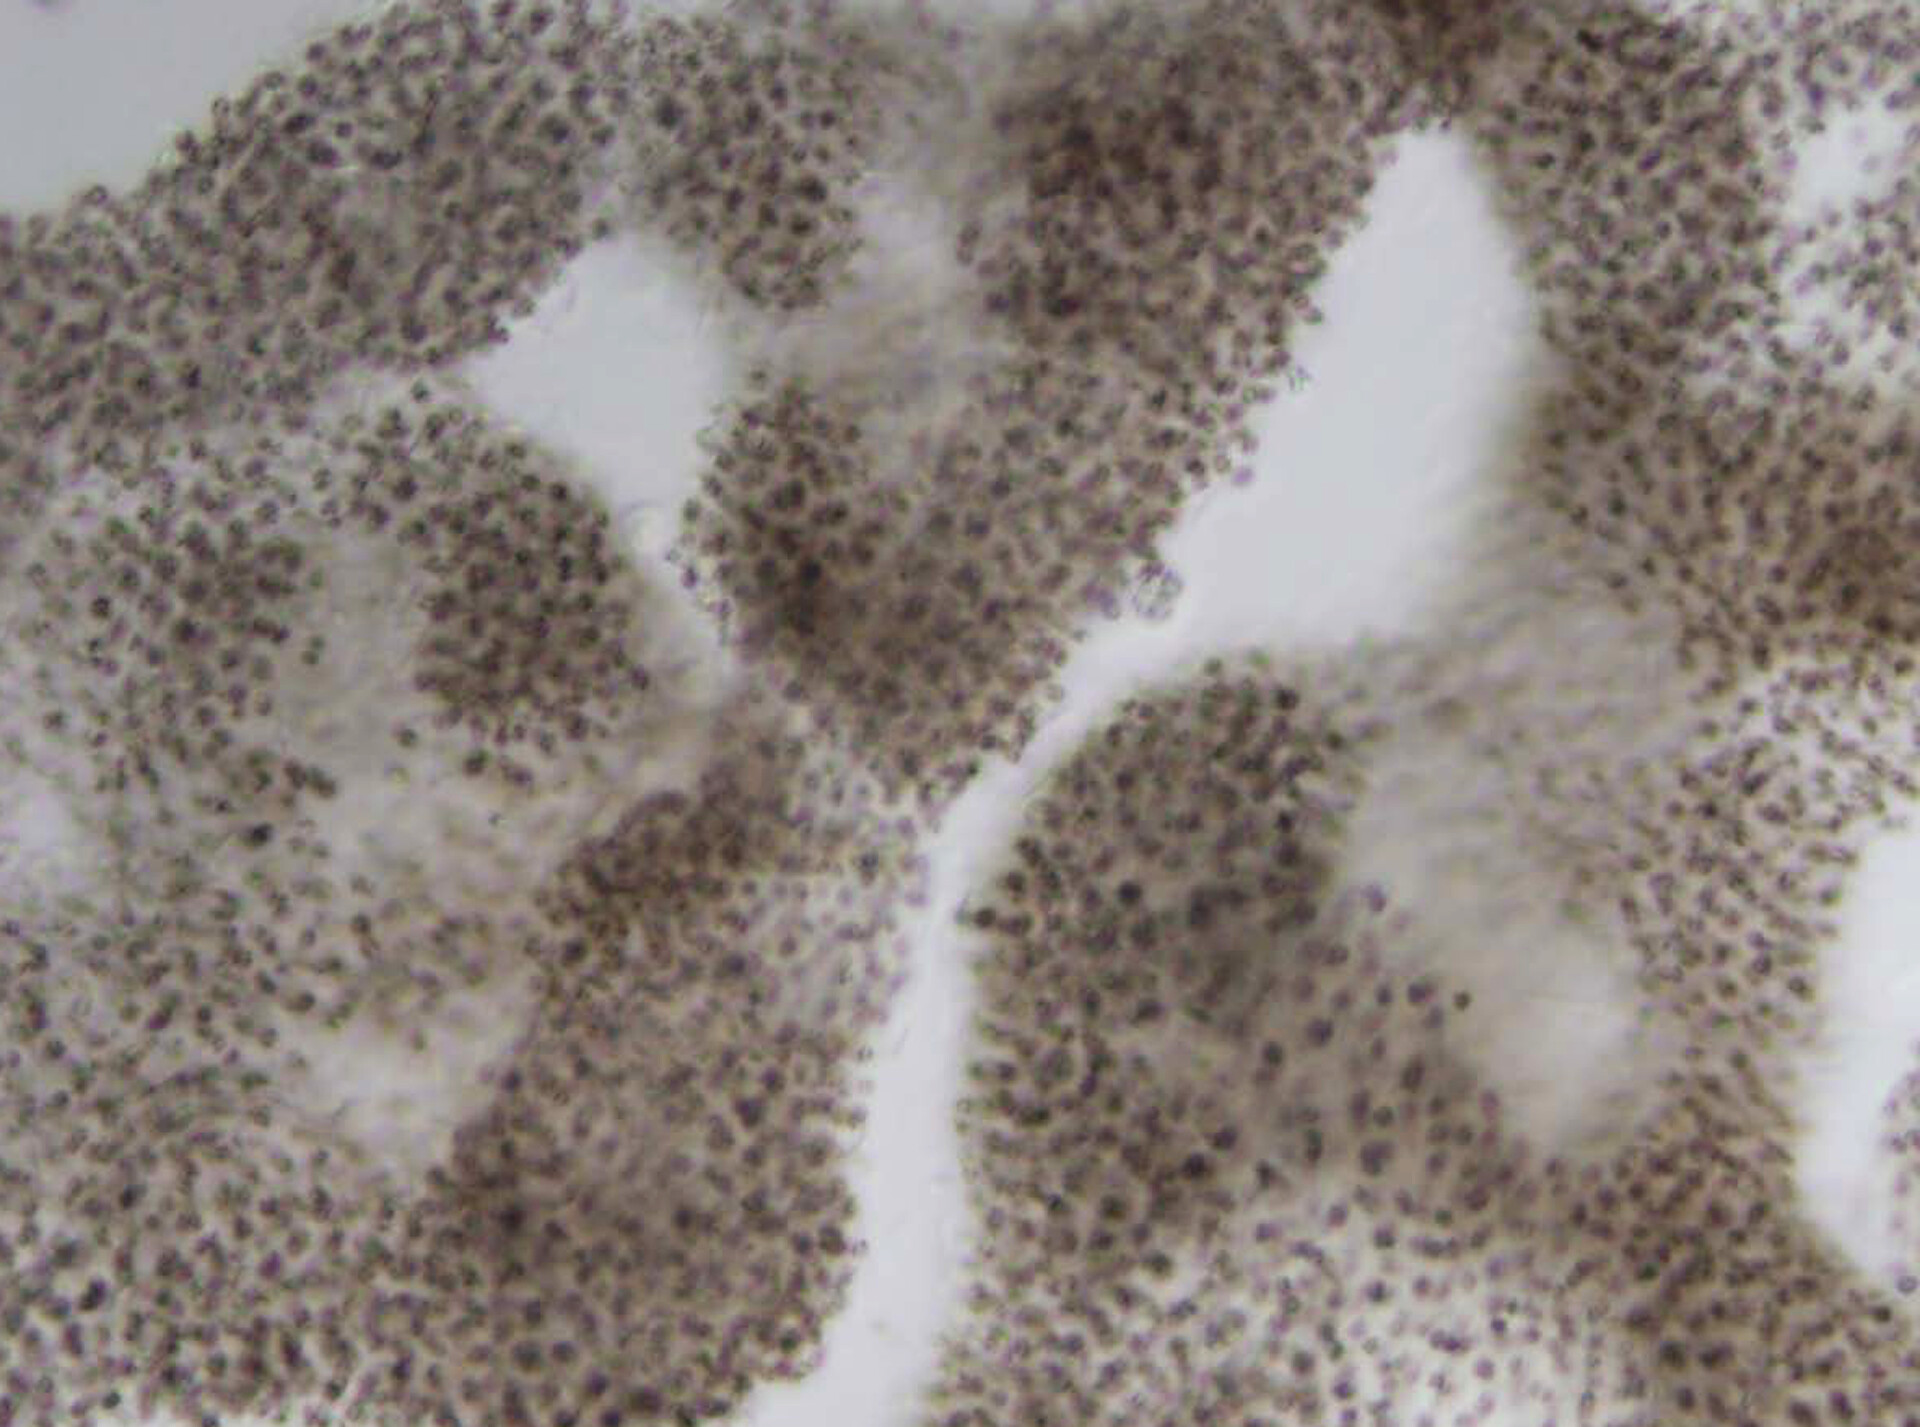 Light Micrograph of Microcystis aeruginosa